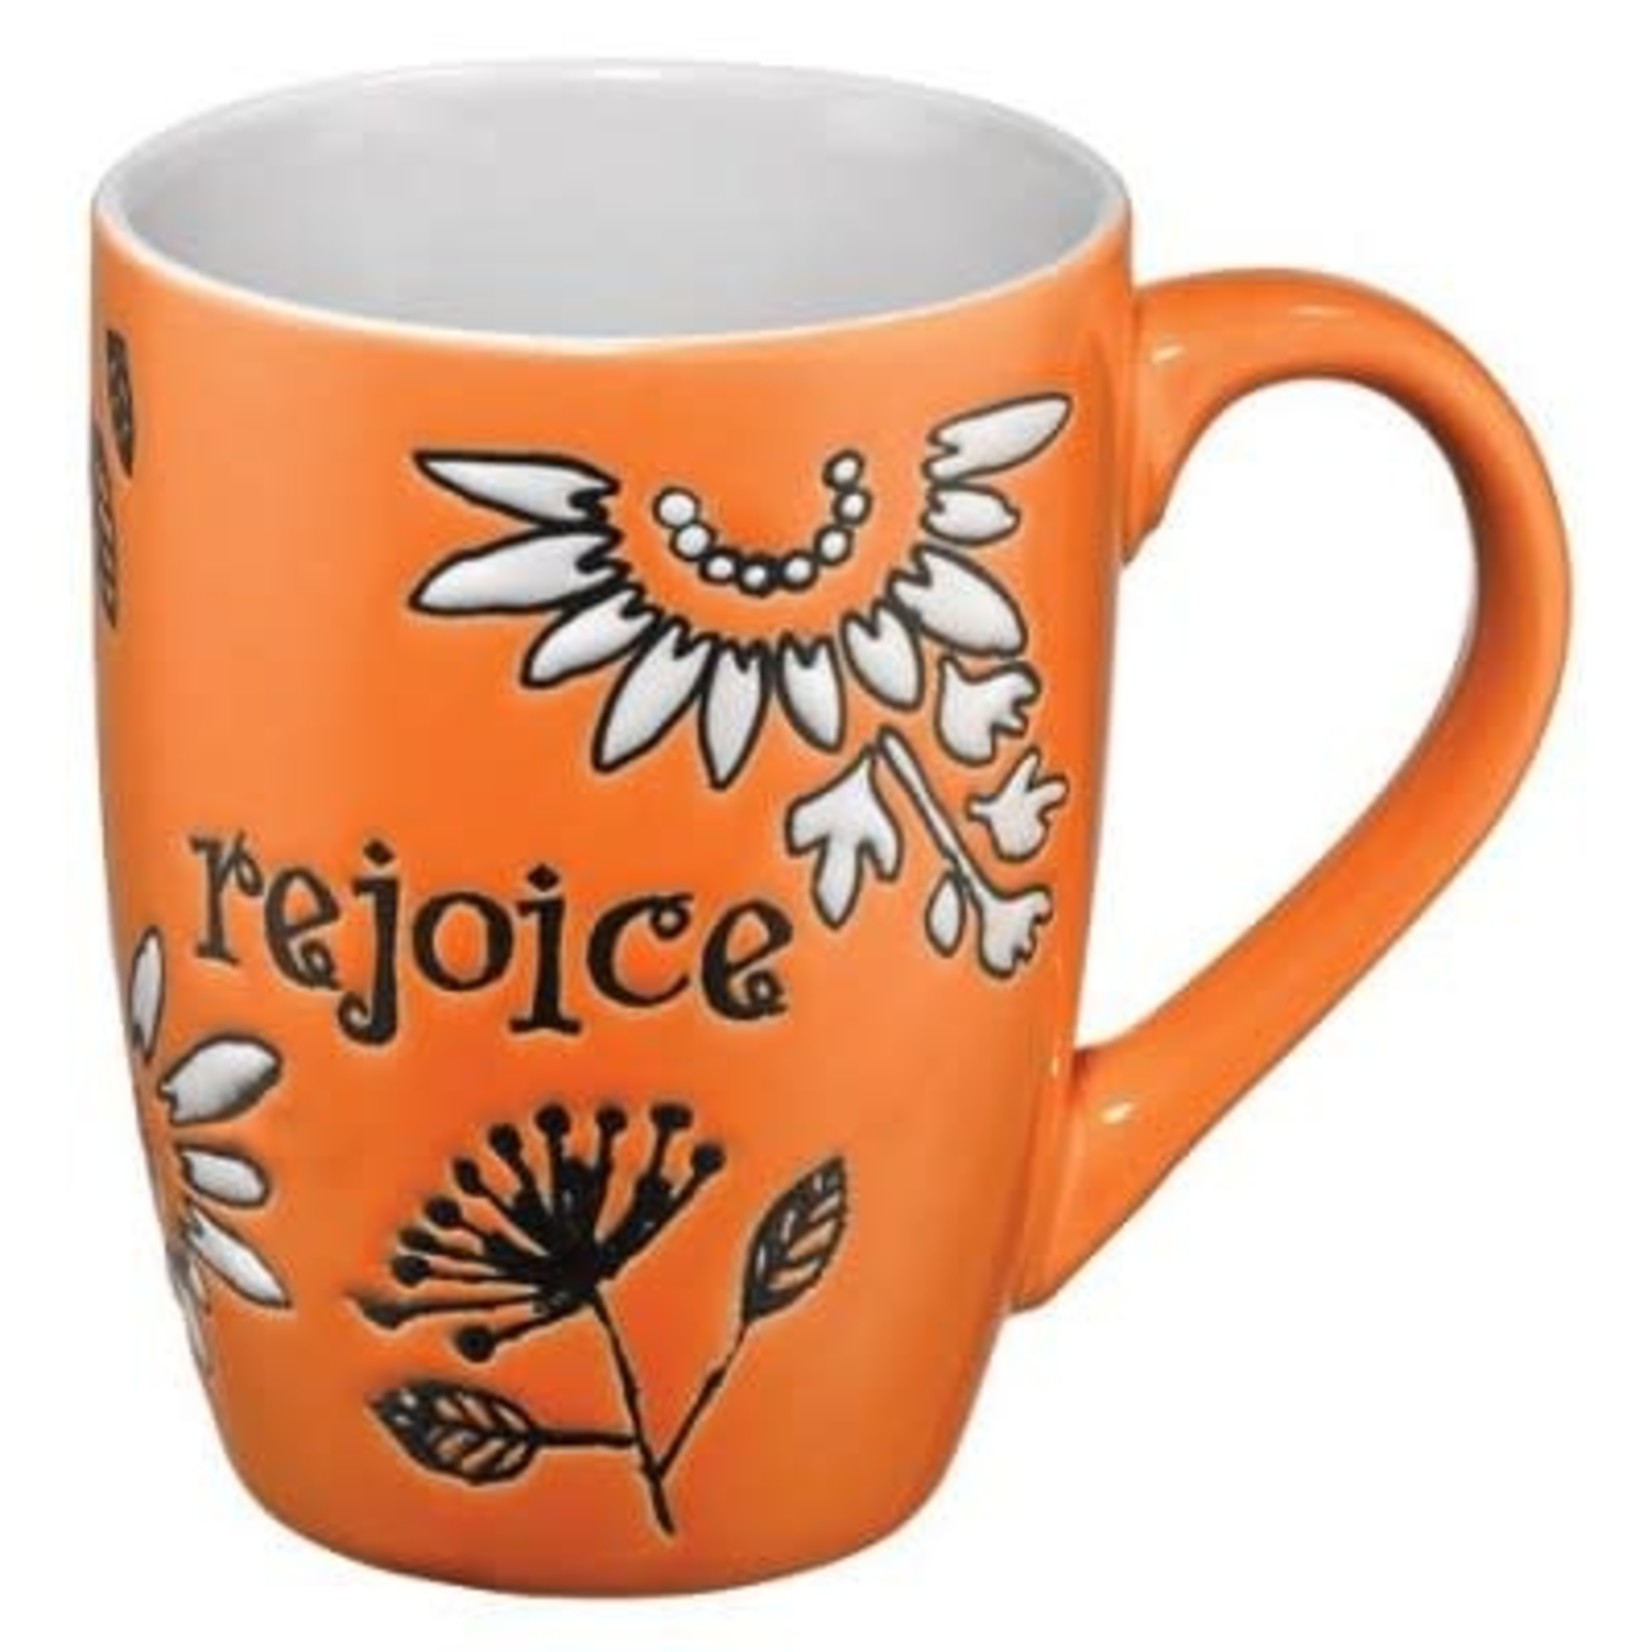 Christian Art Gifts Rejoice Mug - Orange - 12 ounce